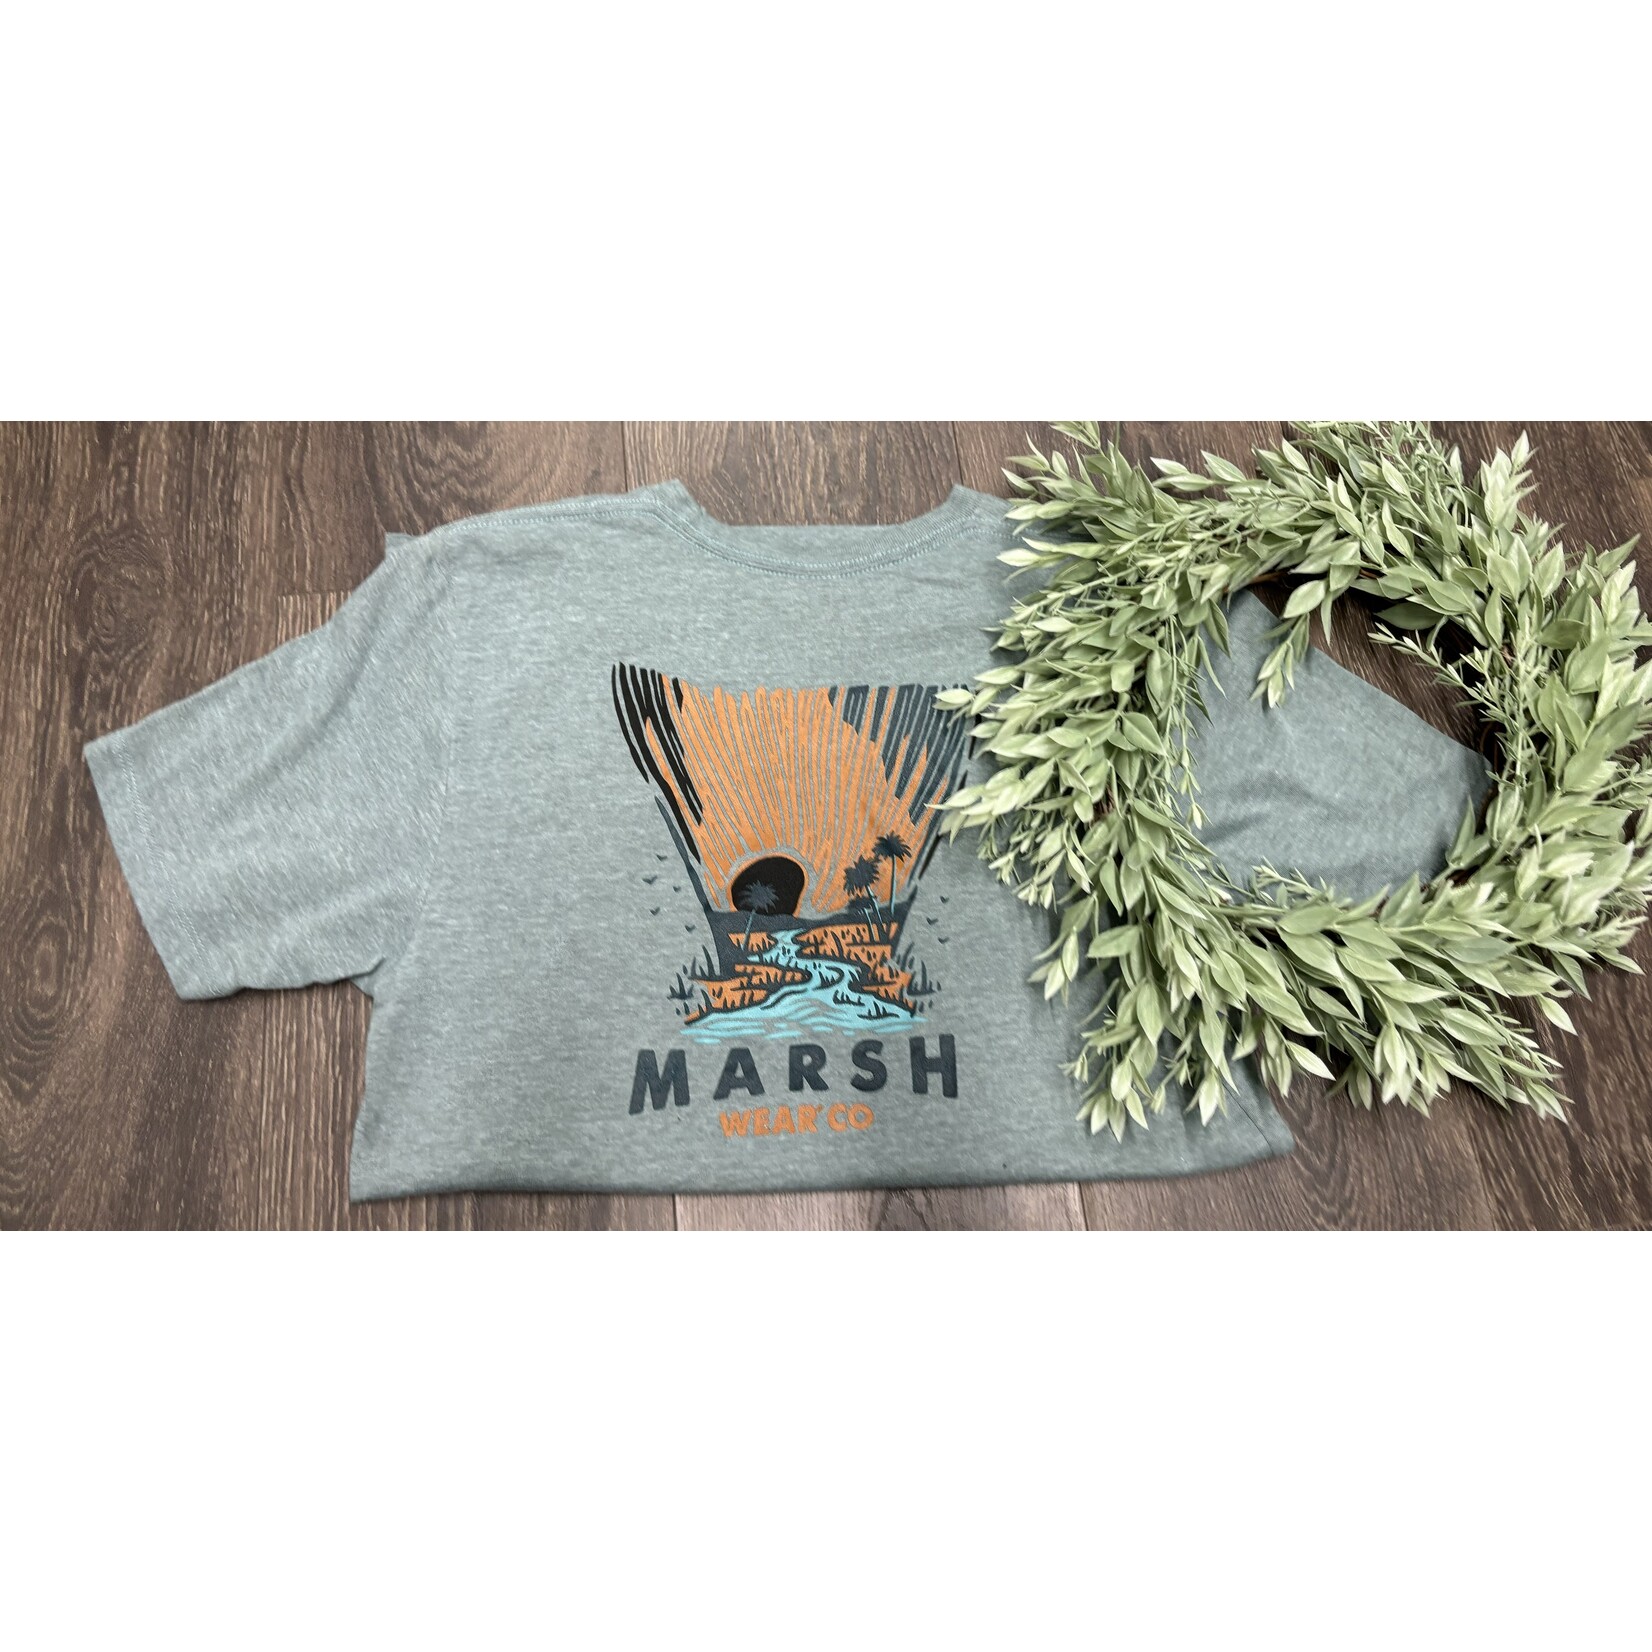 Marsh Wear Marsh Wear Redfish Tail S/S TEE Shirt